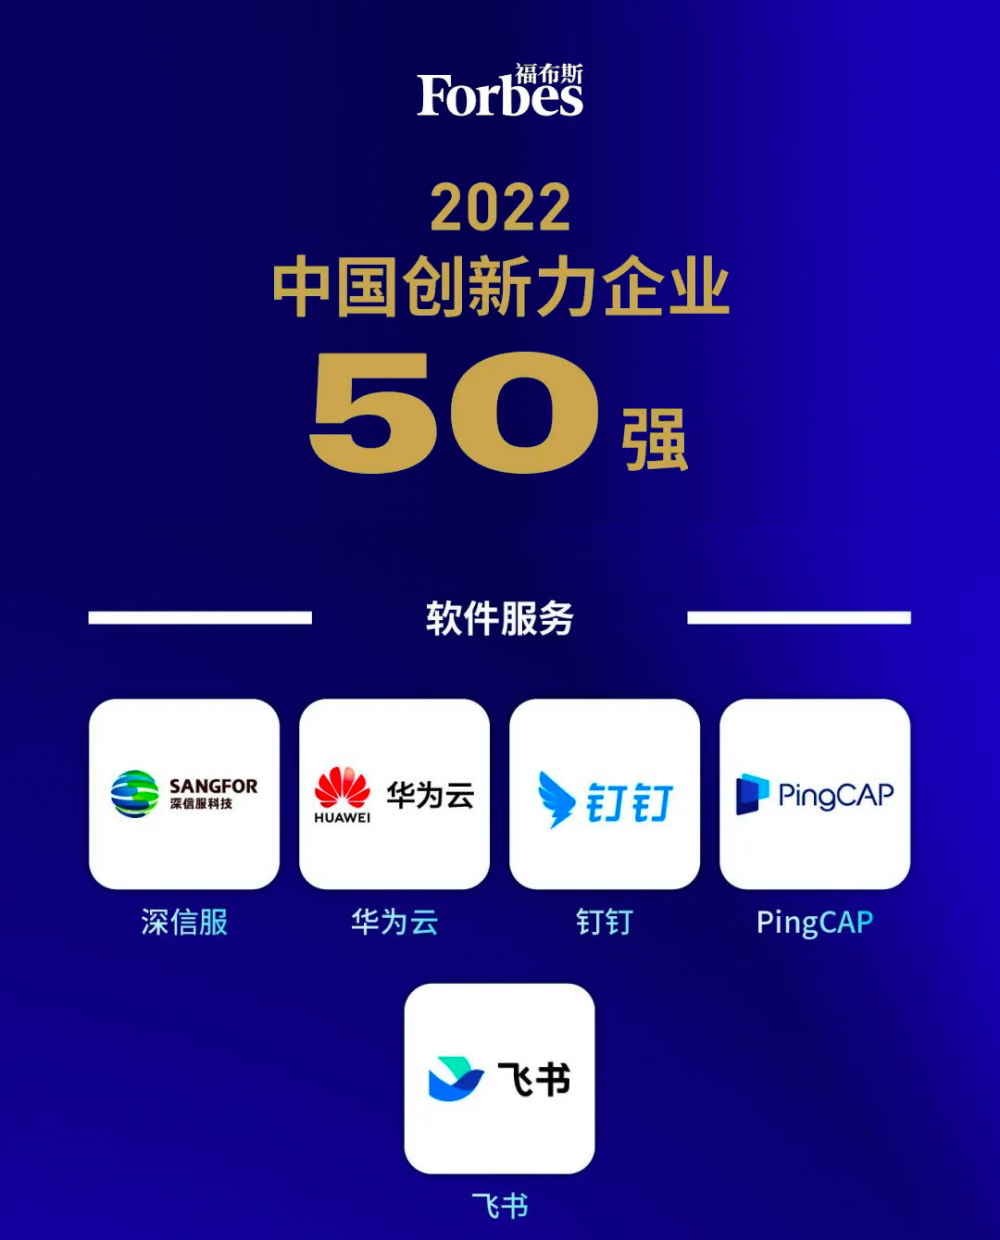 PingCAP 入选福布斯中国 2022 中国创新力企业 50 强